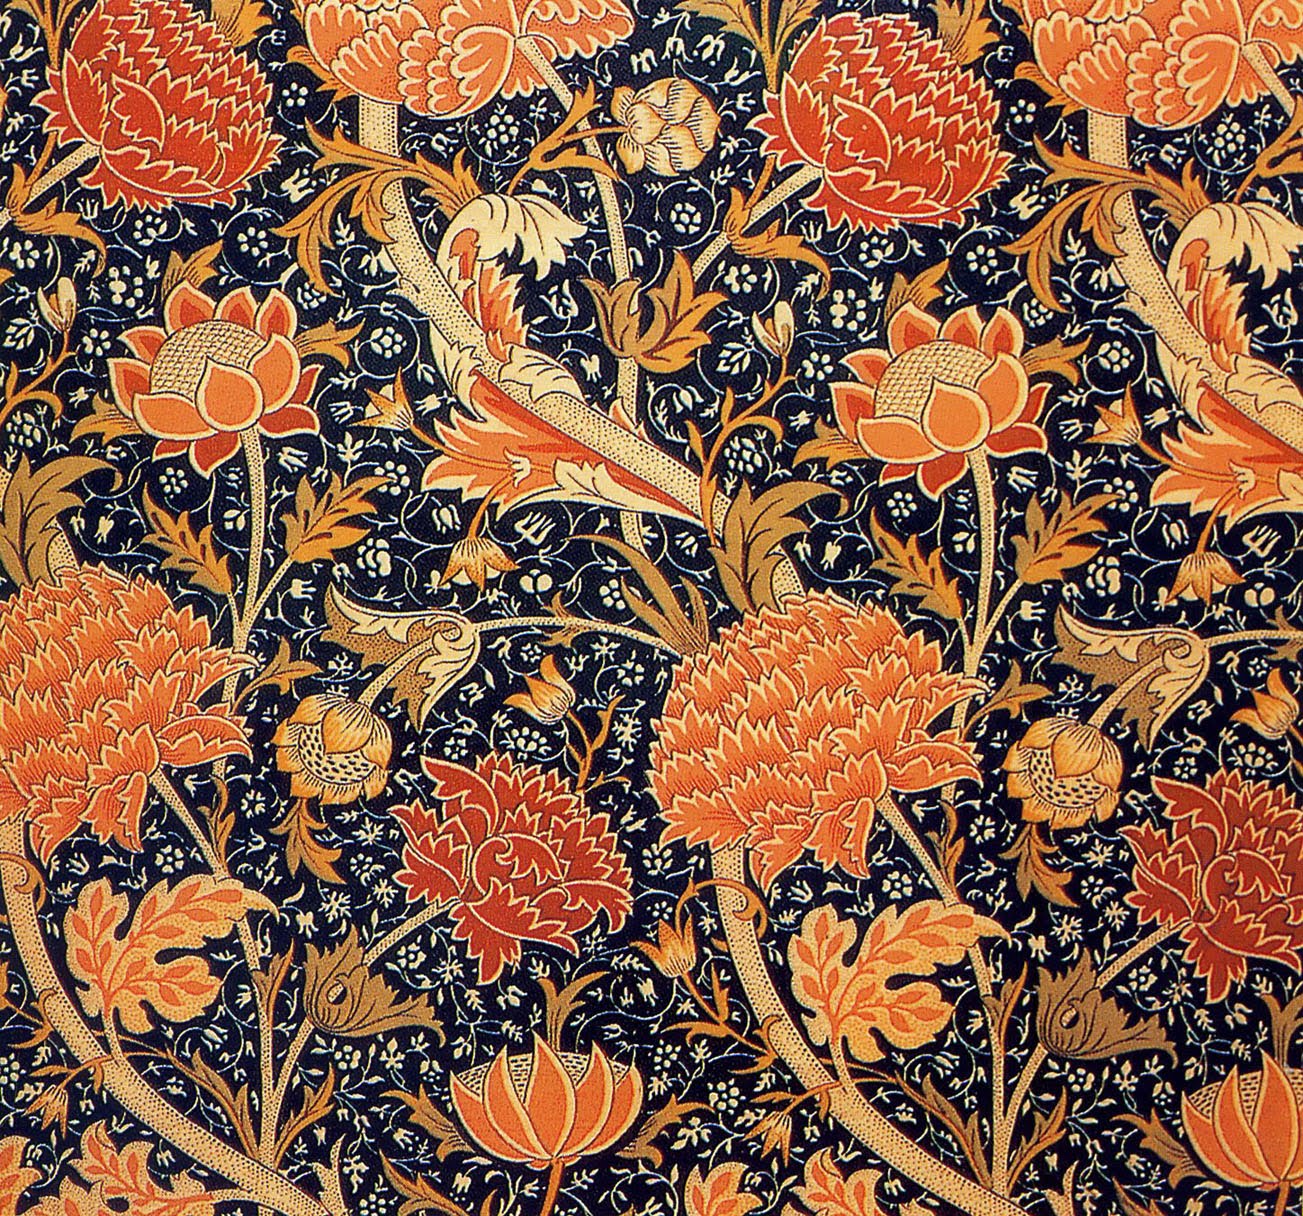 🔥 Download Art Artists William Morris Wallpaper Textiles by @joshuad80